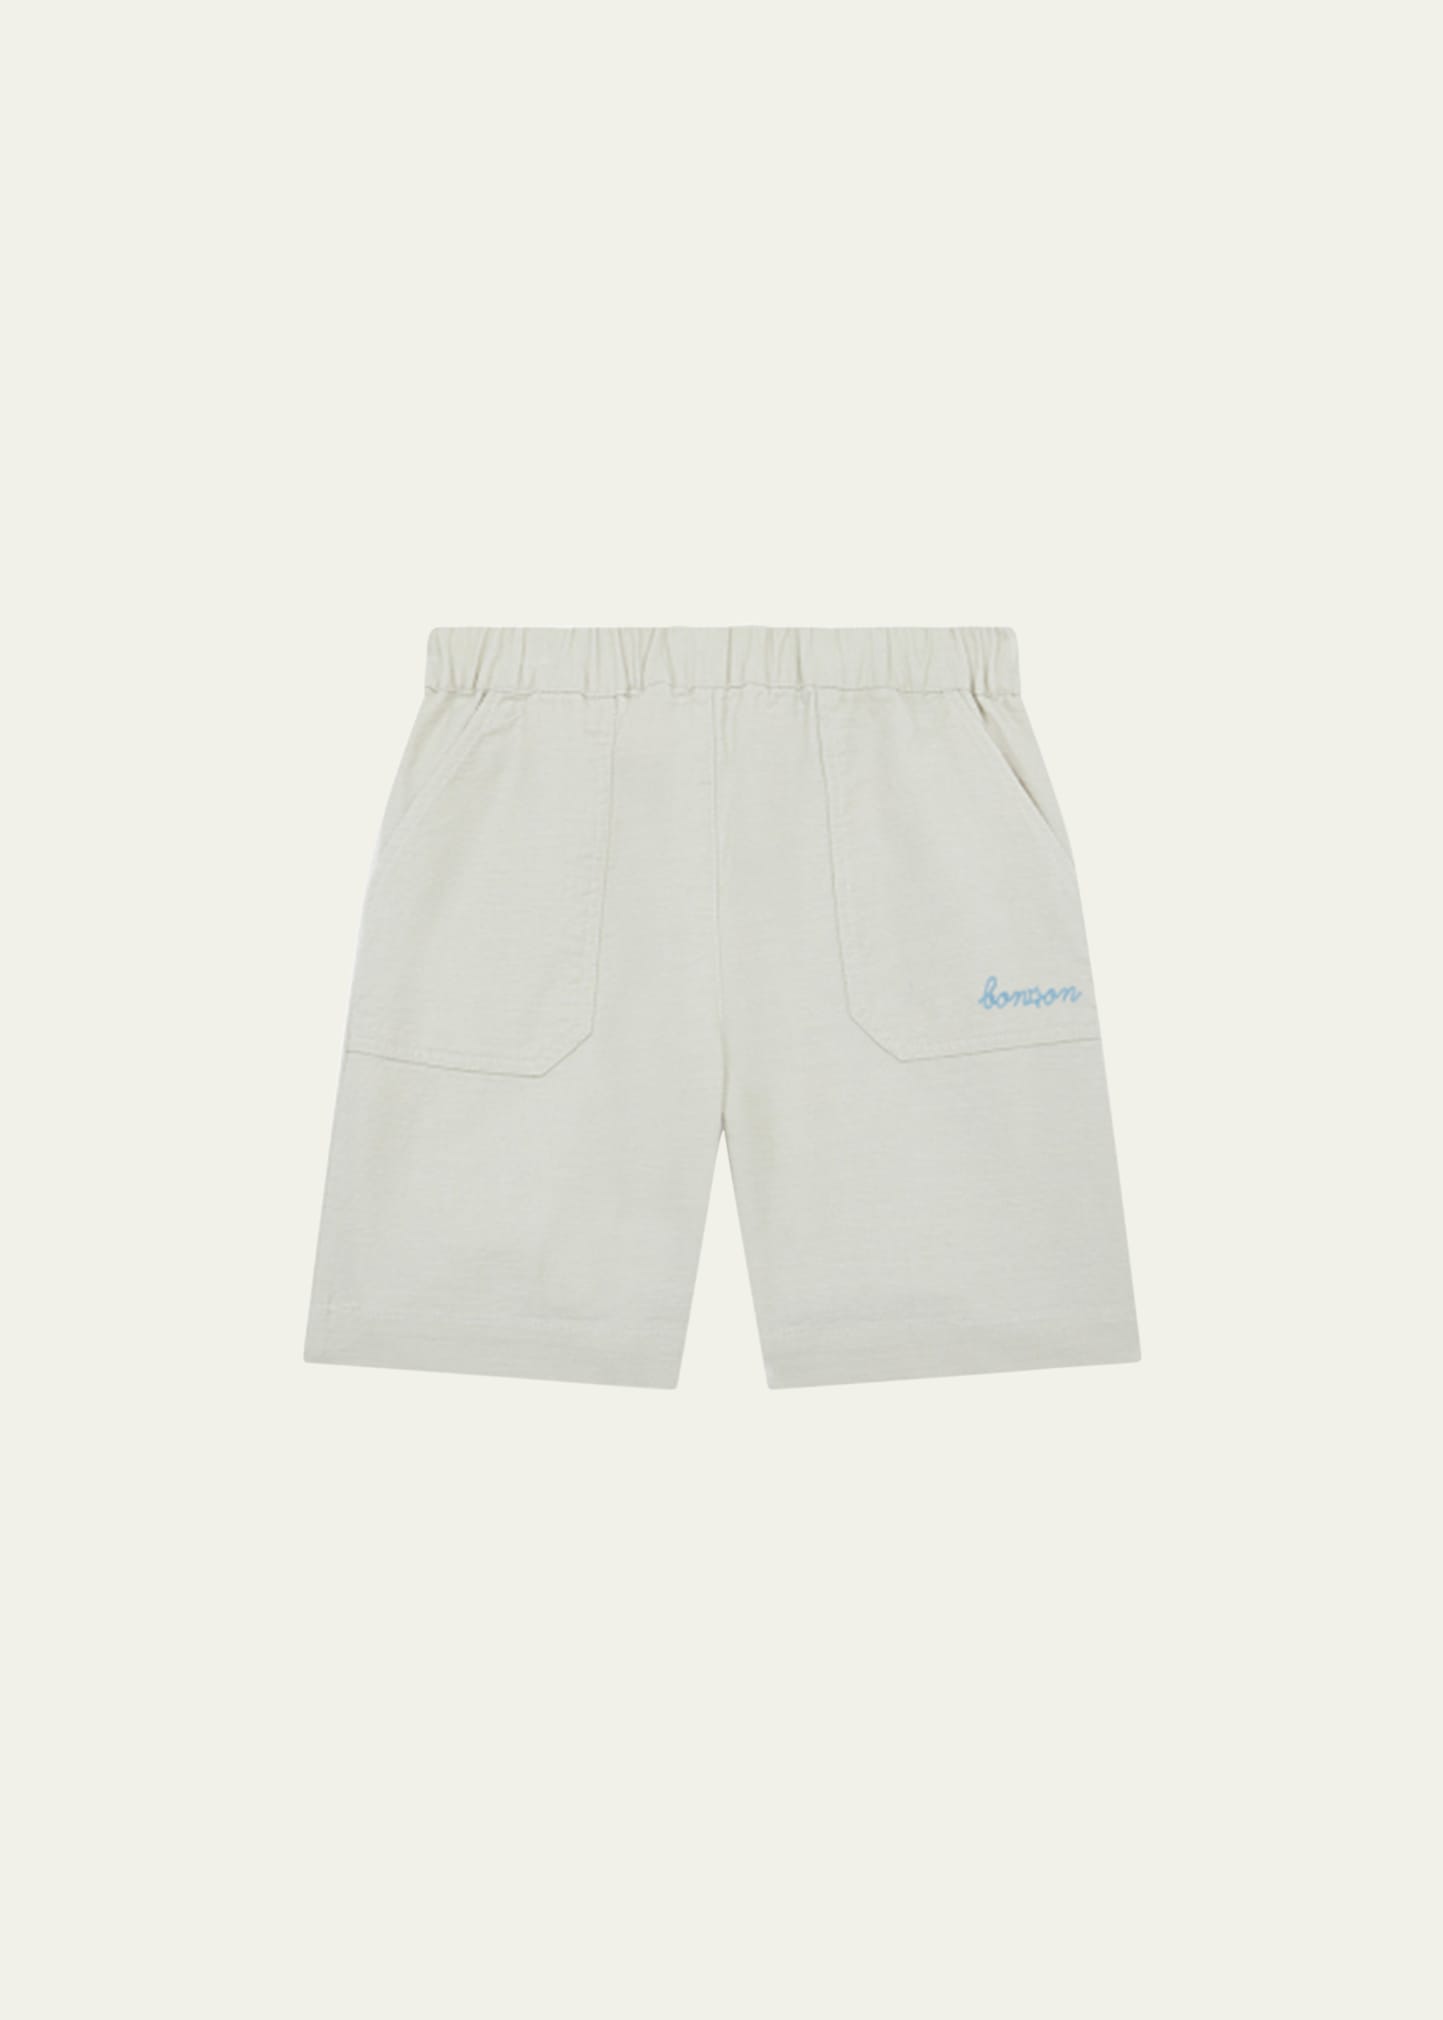 Bonton Boy's Embroidered Cotton Shorts, Size 4-12